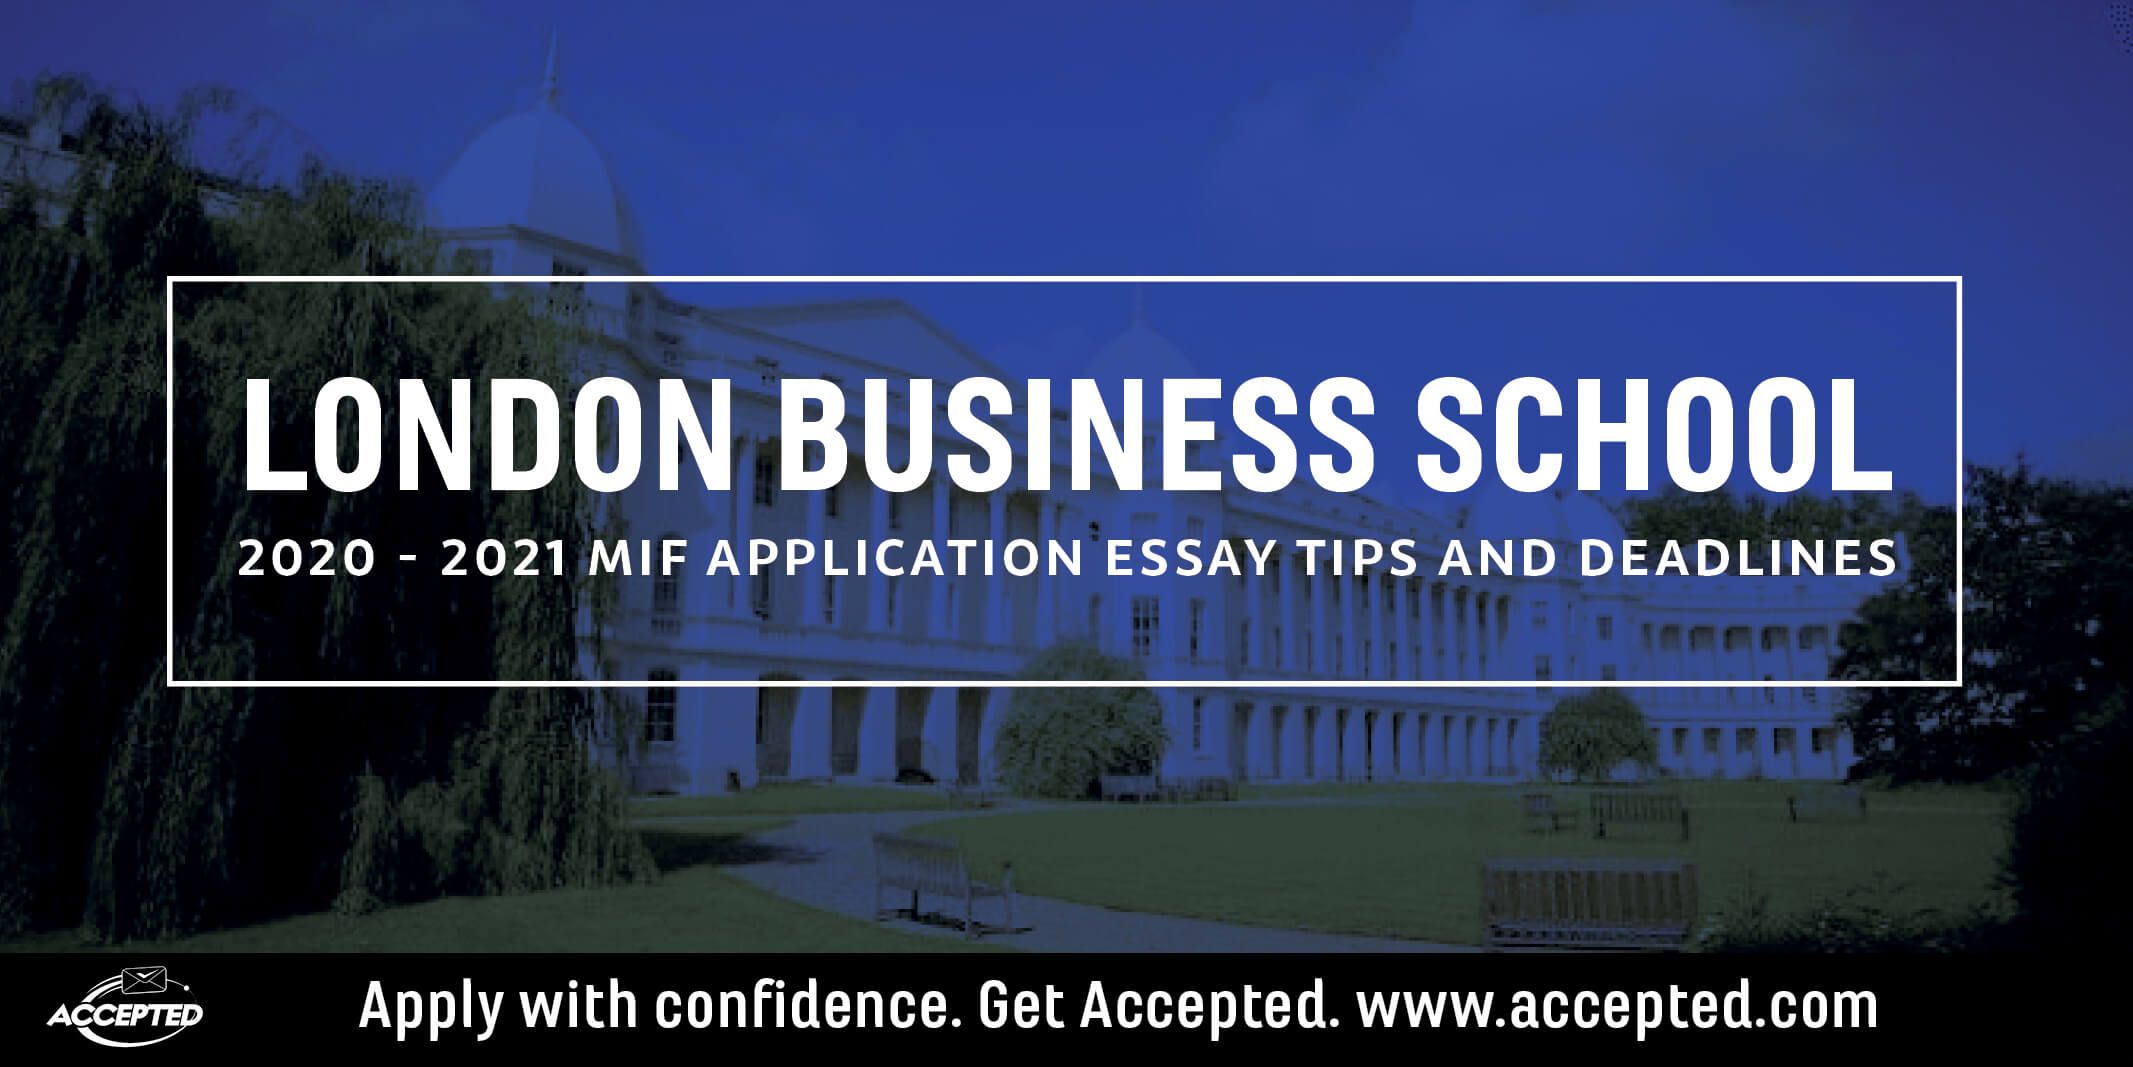 London Business School MiF application essay tips